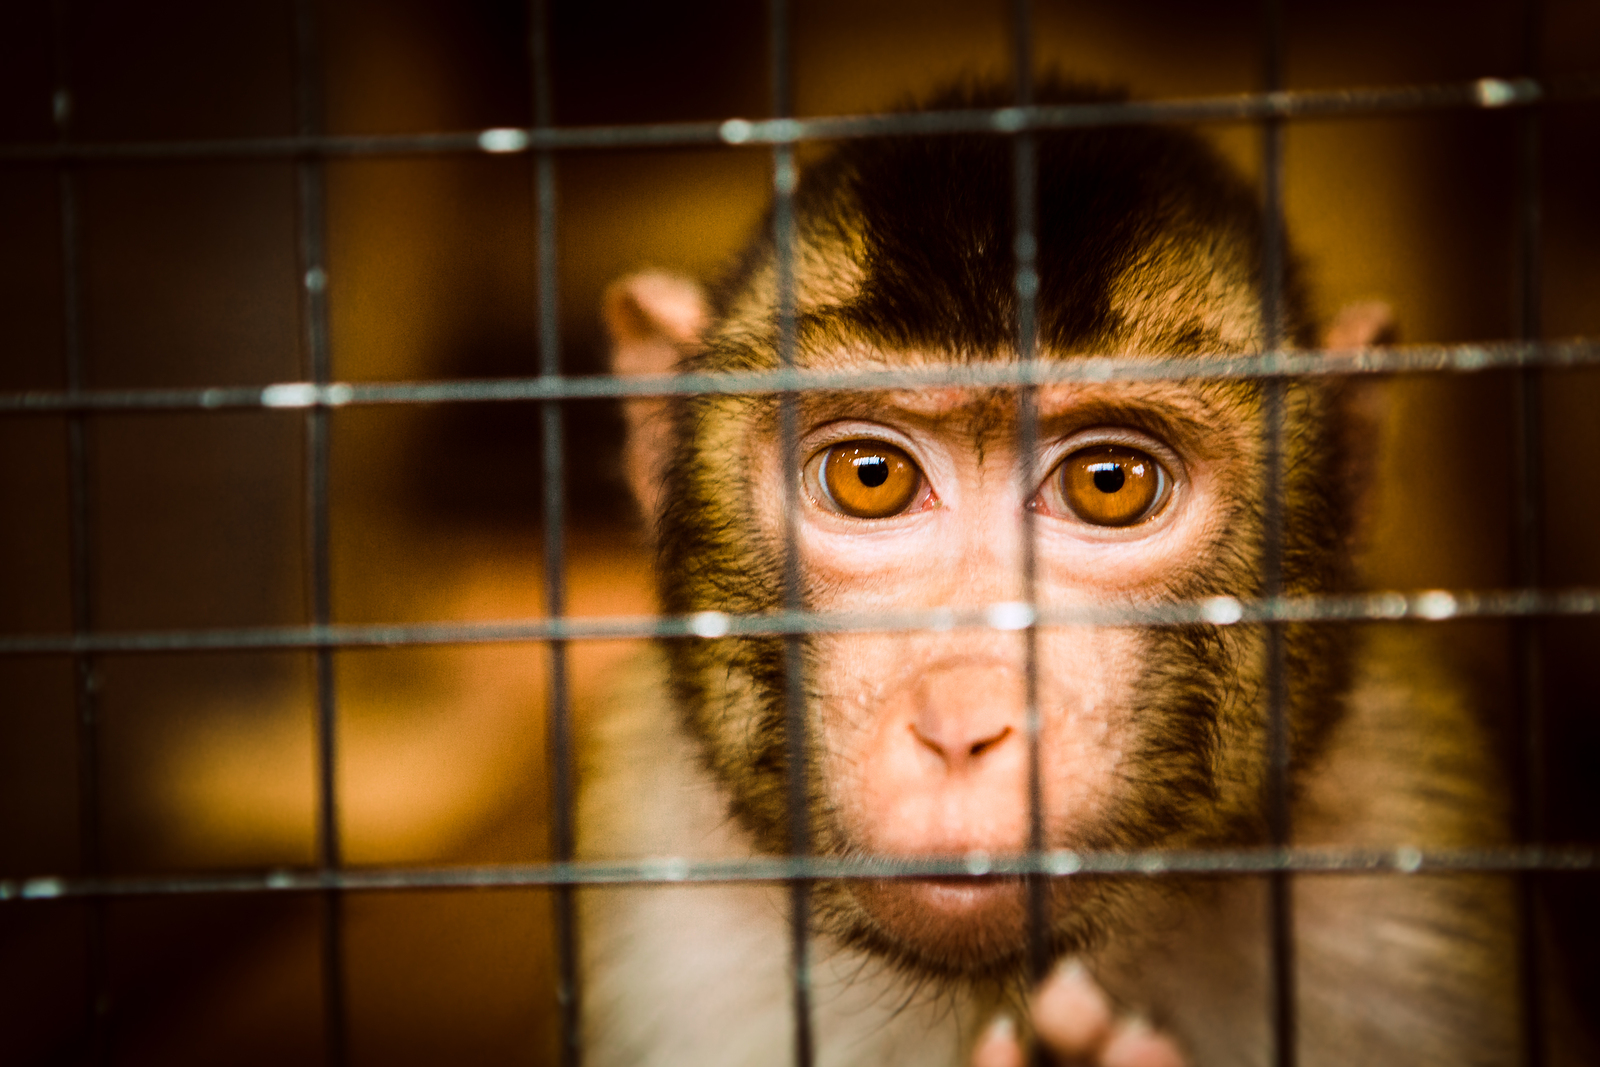 NPR: German carmakers gas humans & monkeys in secret inhumane tests, chief suspended